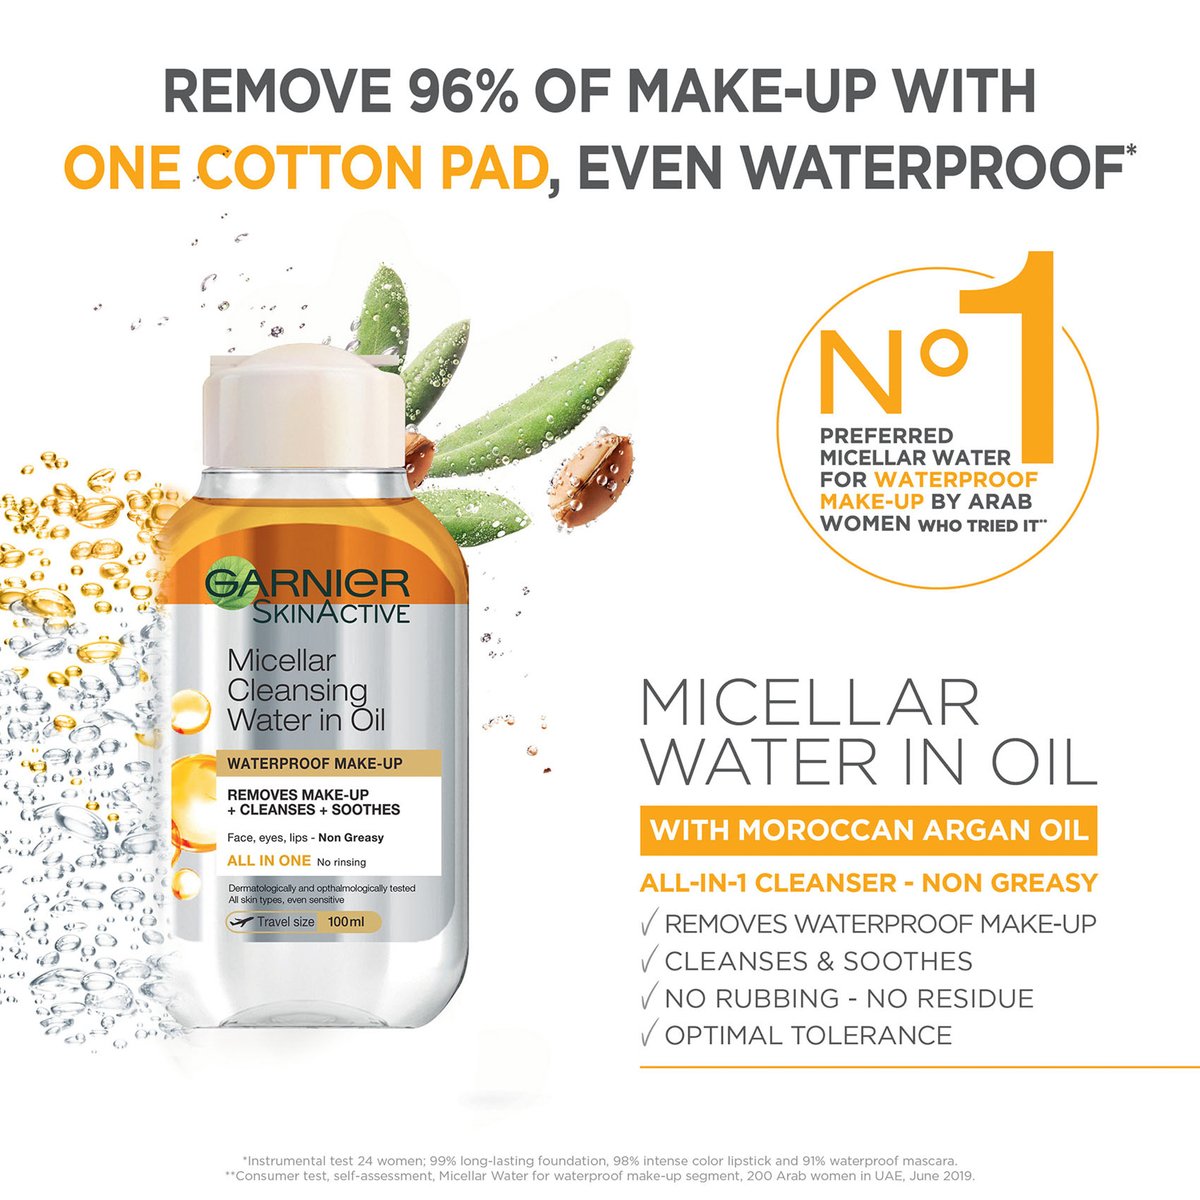 Garnier Skin Active Micellar Cleansing Water in Oil 100 ml